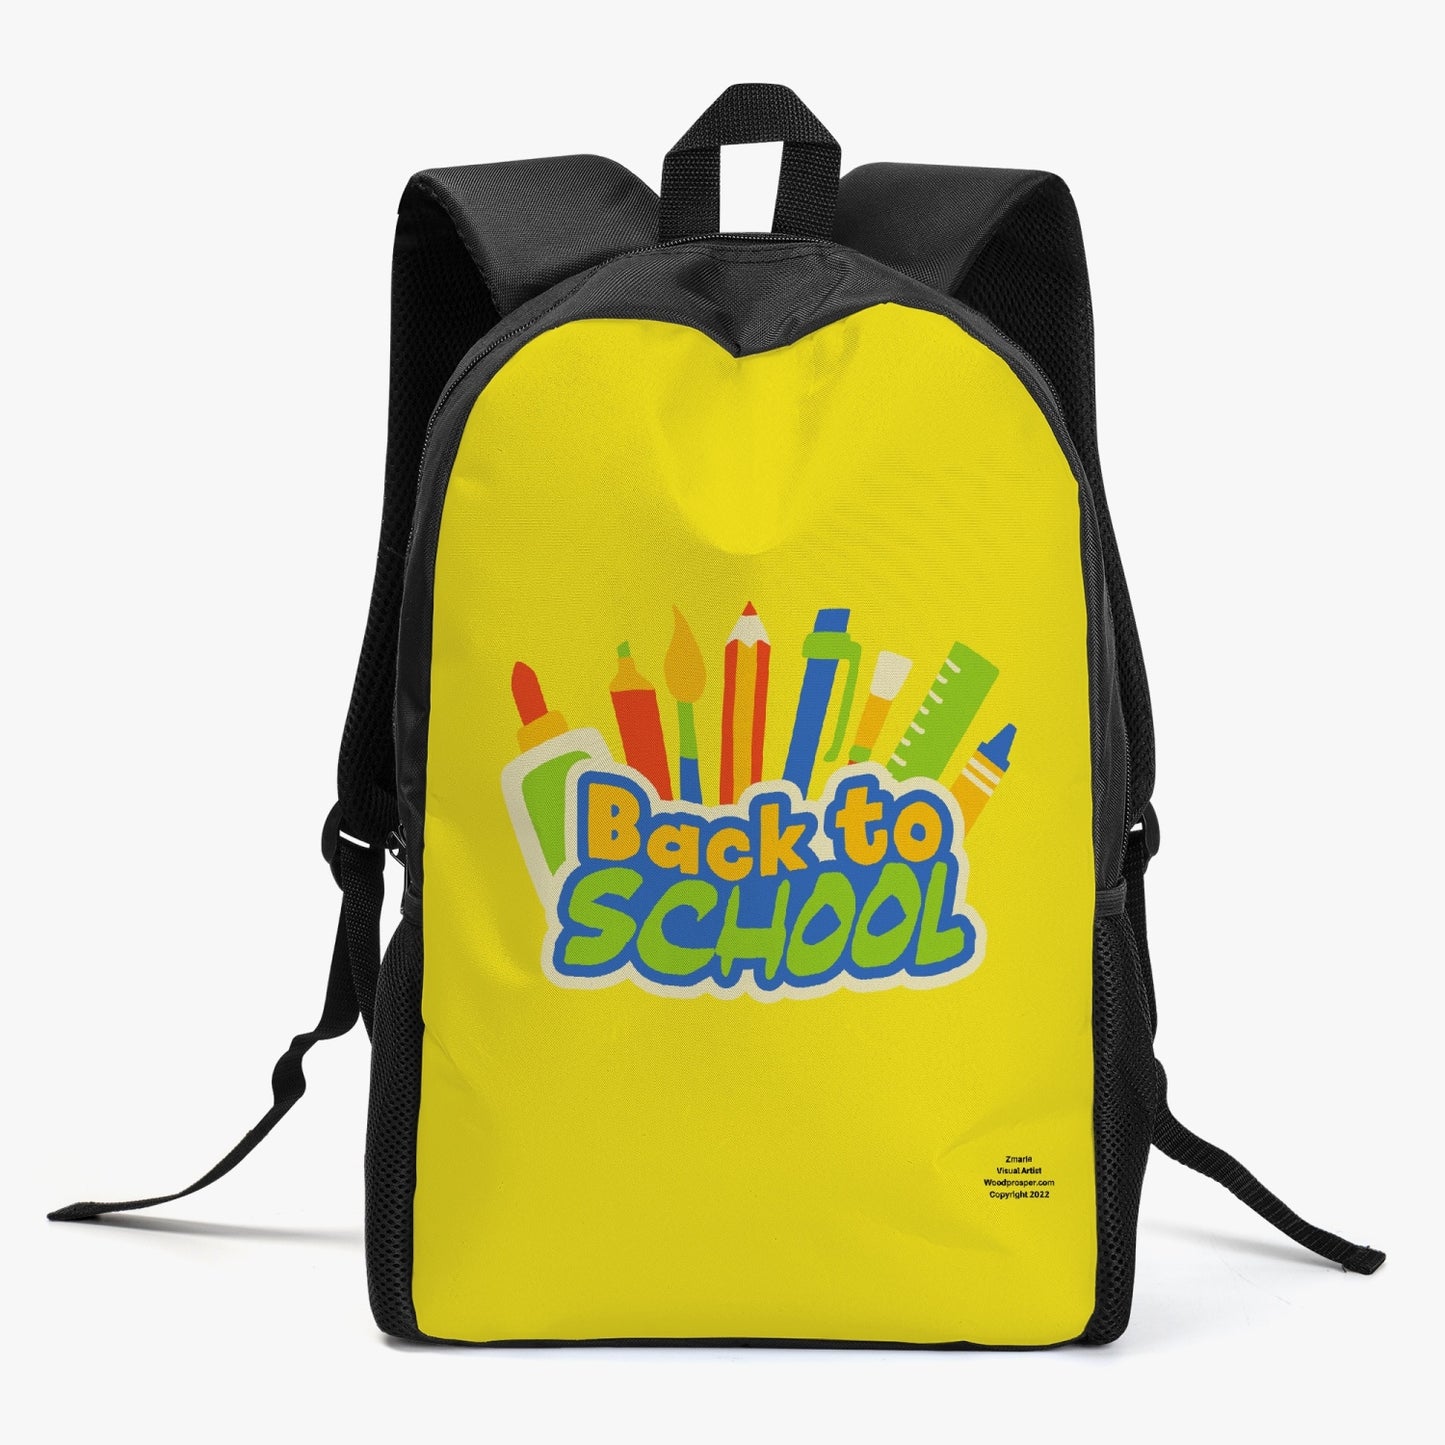 Back To School Kid's School Backpack (Yellow)